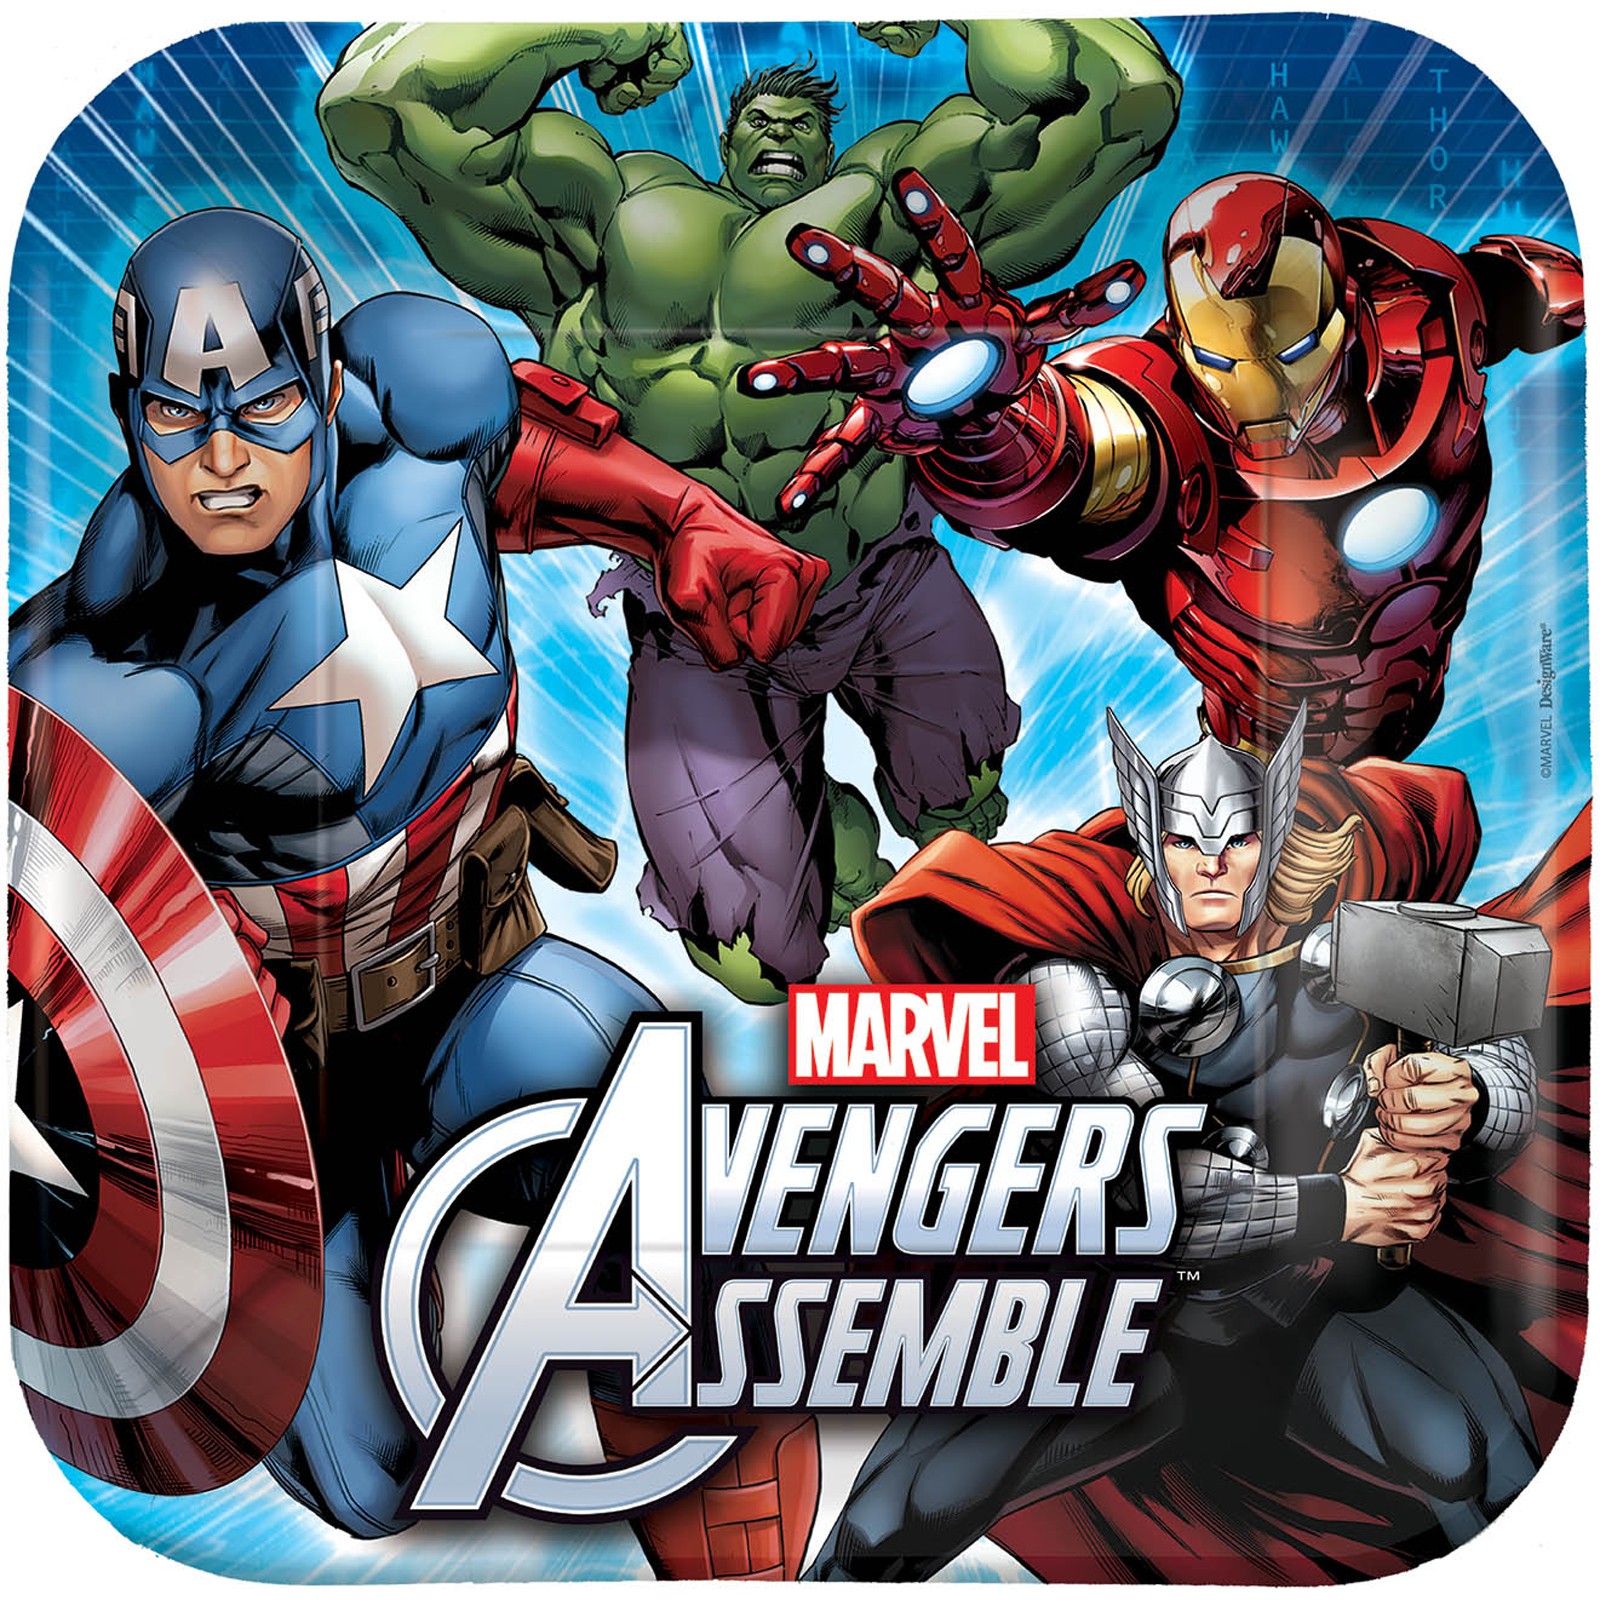 Avengers Assemble #2